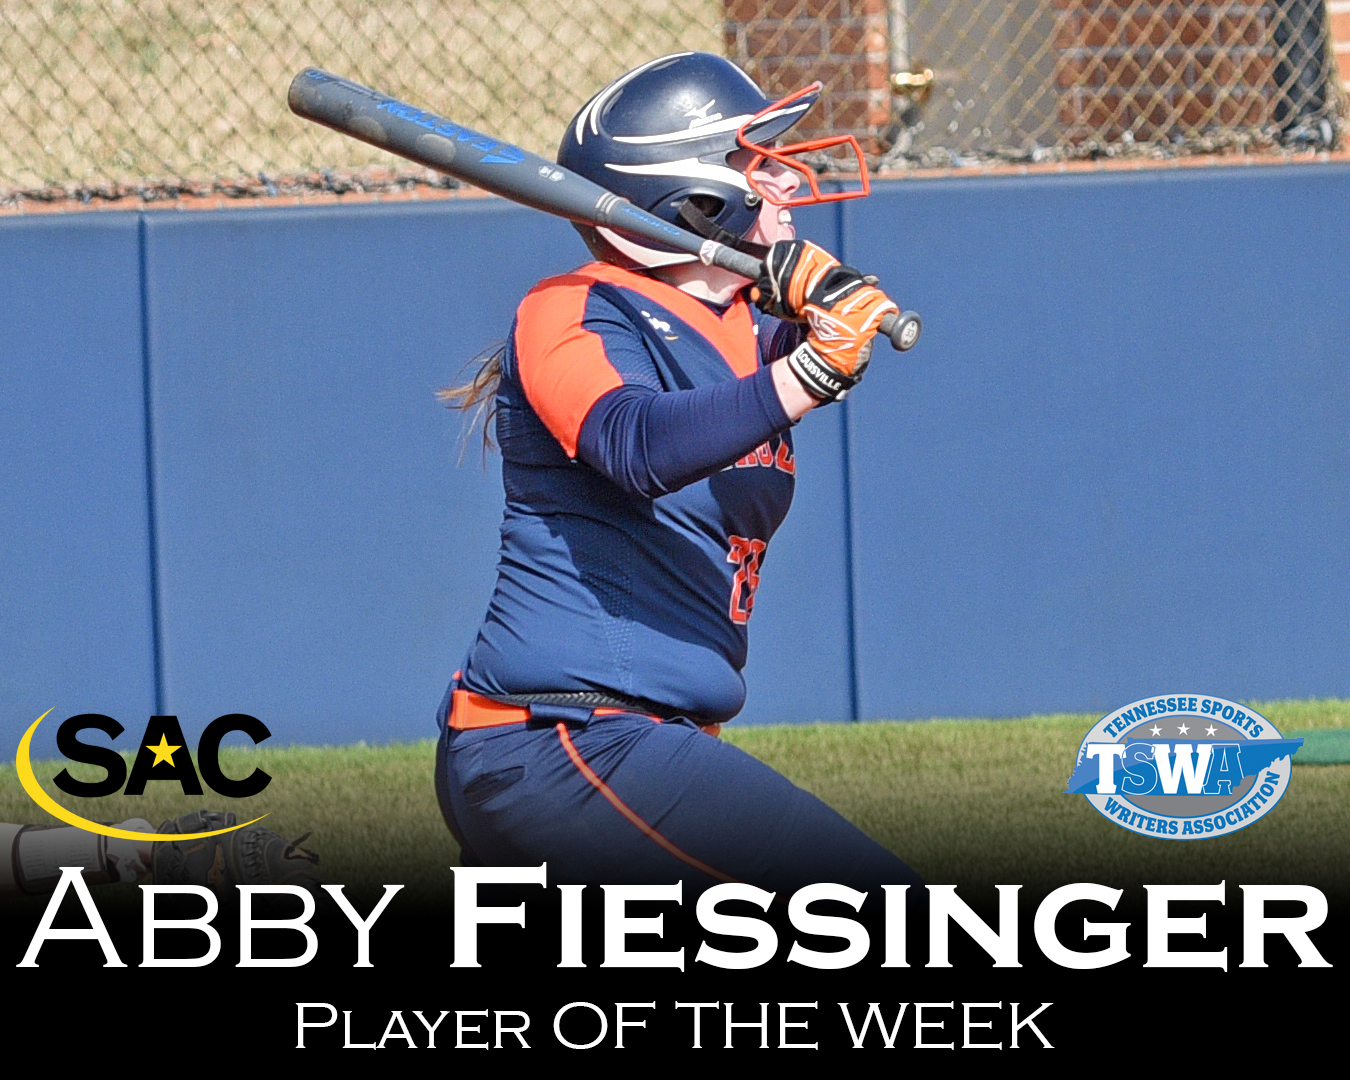 Fiessinger’s streak leads to SAC/TSWA Player of the Week honors